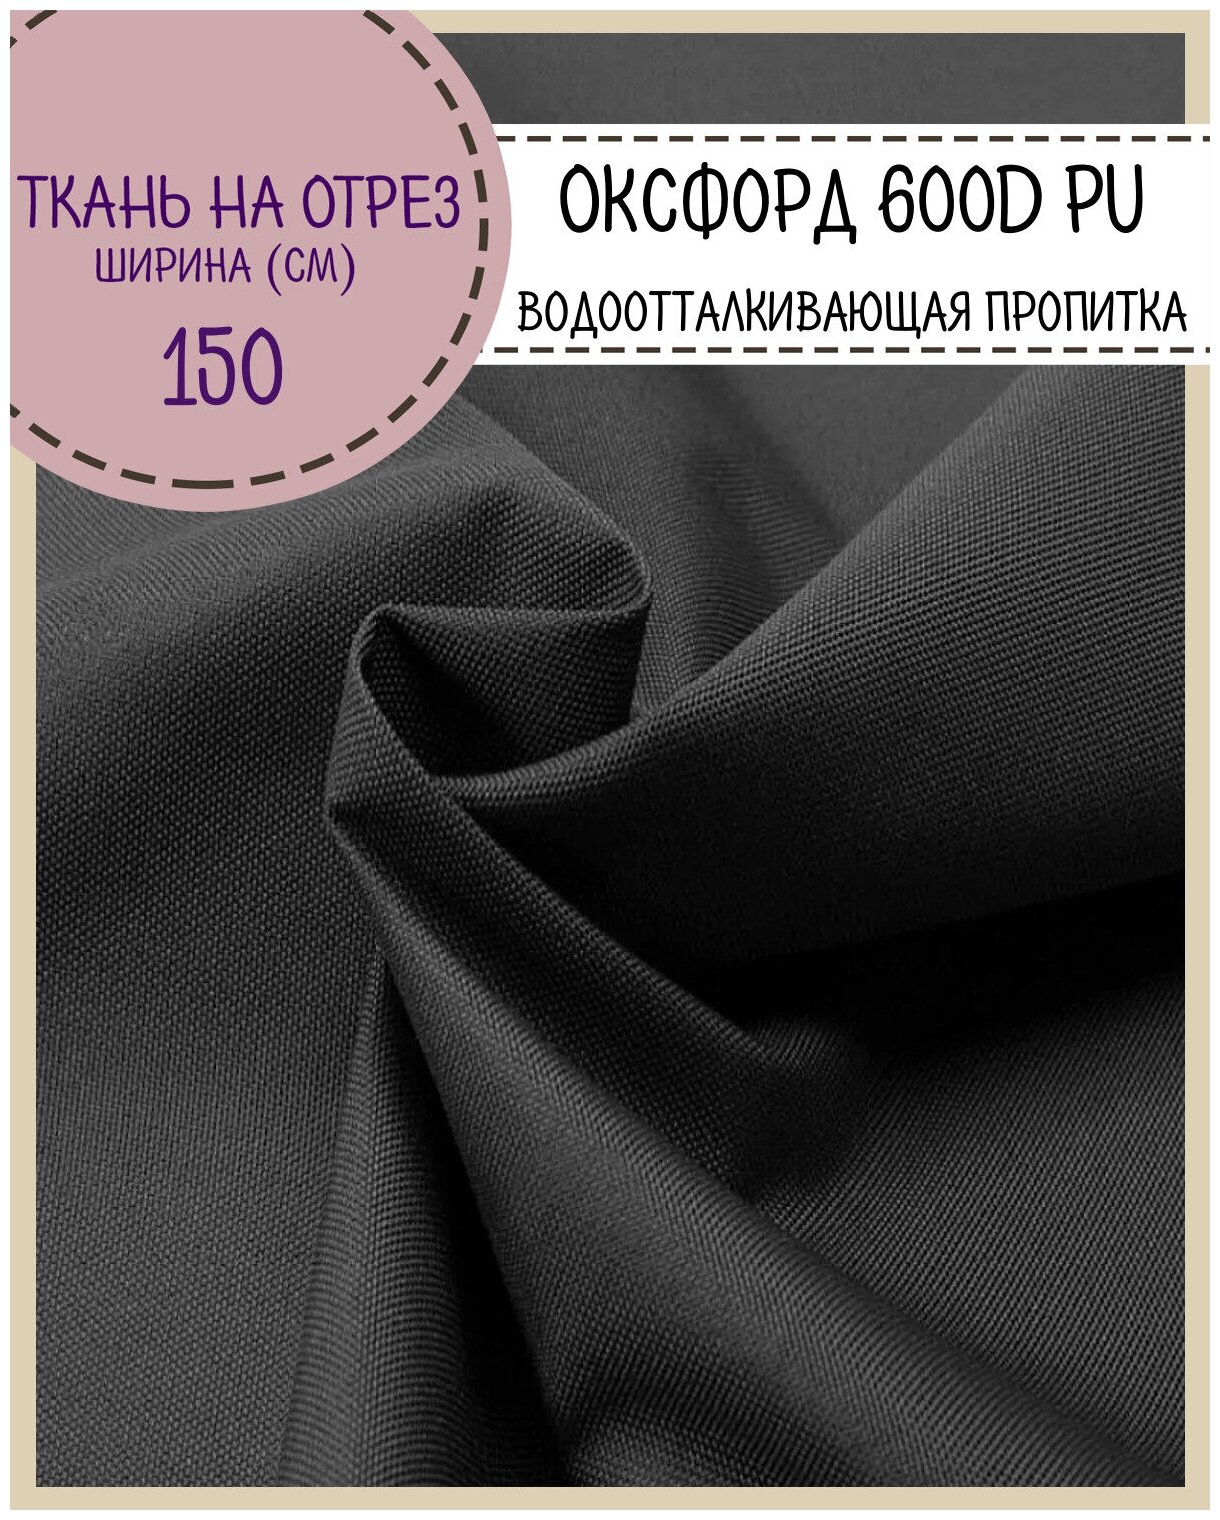 Ткань Оксфорд 600D PU 1000, пропитка водоотталкивающая, цв. т. серый, ш-150 см, на отрез, цена за пог. метр